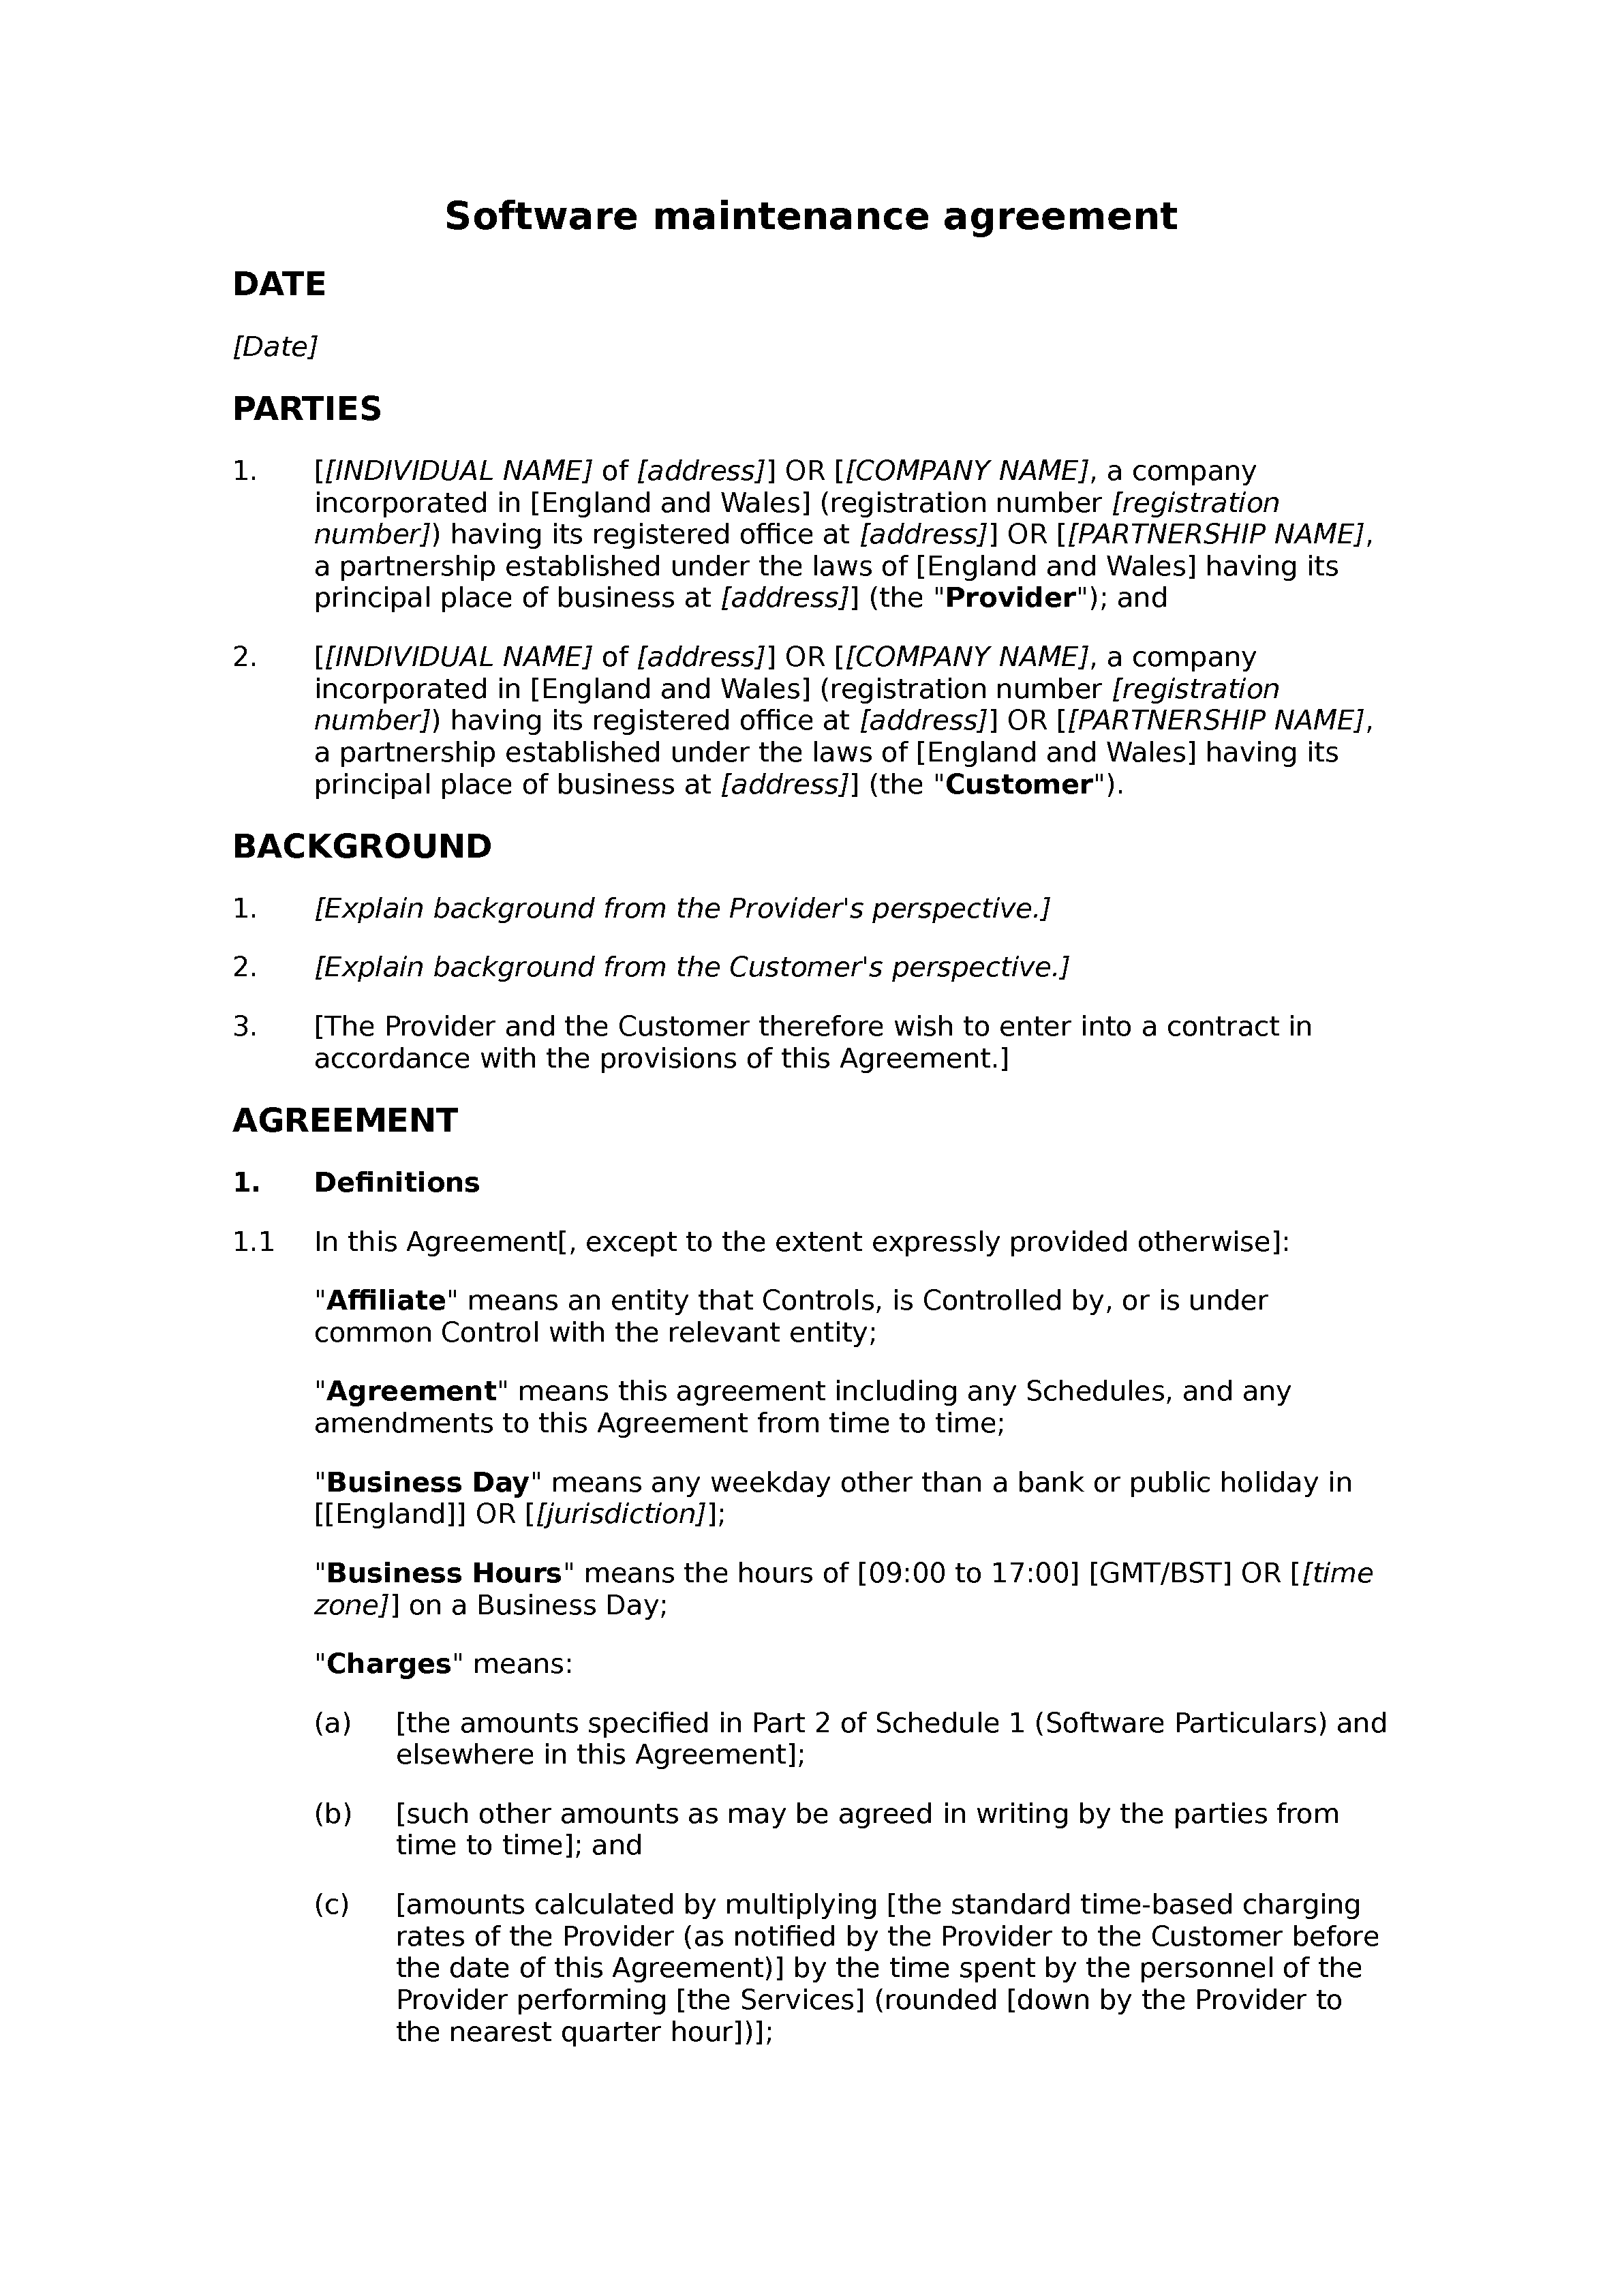 Software maintenance agreement (standard) document preview